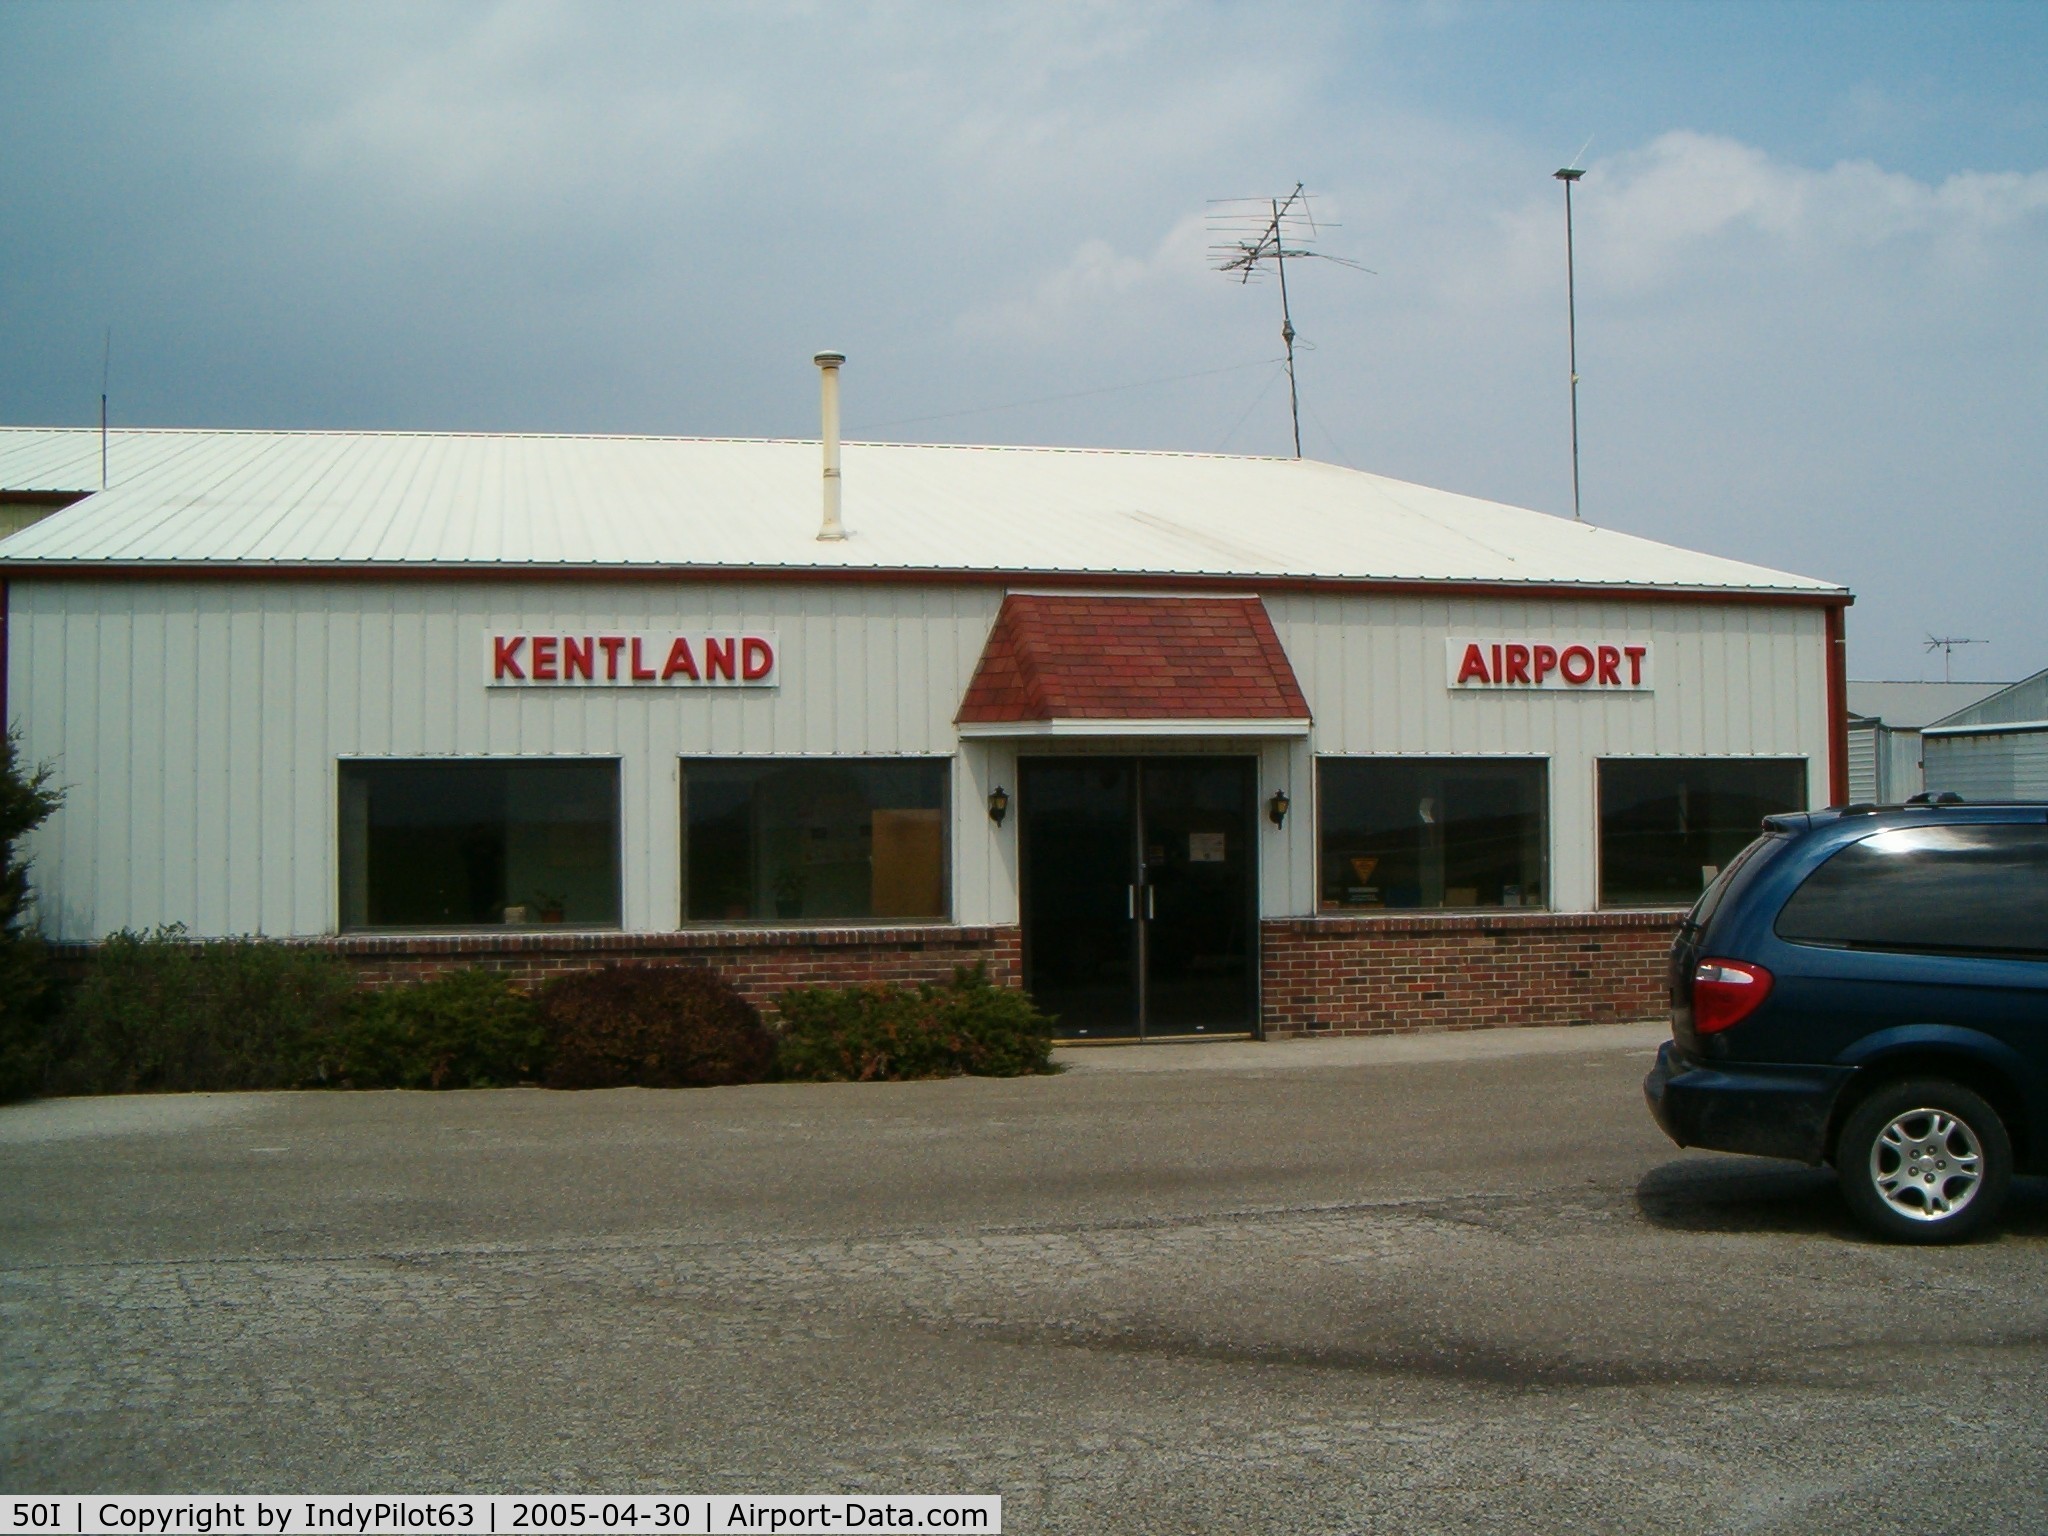 Kentland Municipal Airport (50I) - The FBO building at Kentland